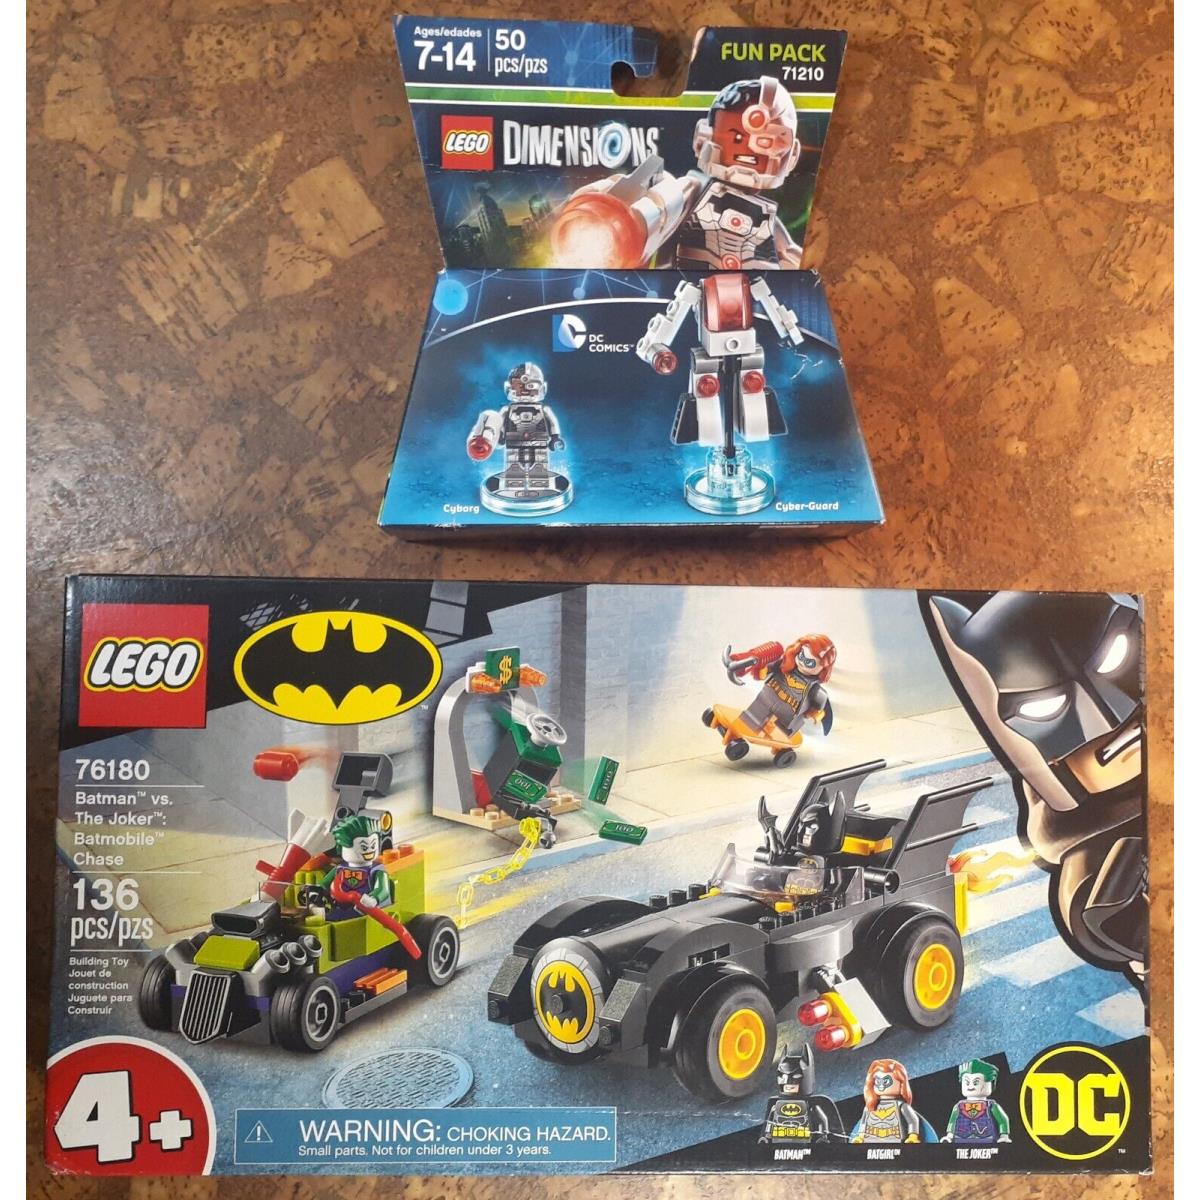 Lego DC Batman Vs. The Joker Batmobile 76180 Dimensions Fun Pack 71210 Cyborg